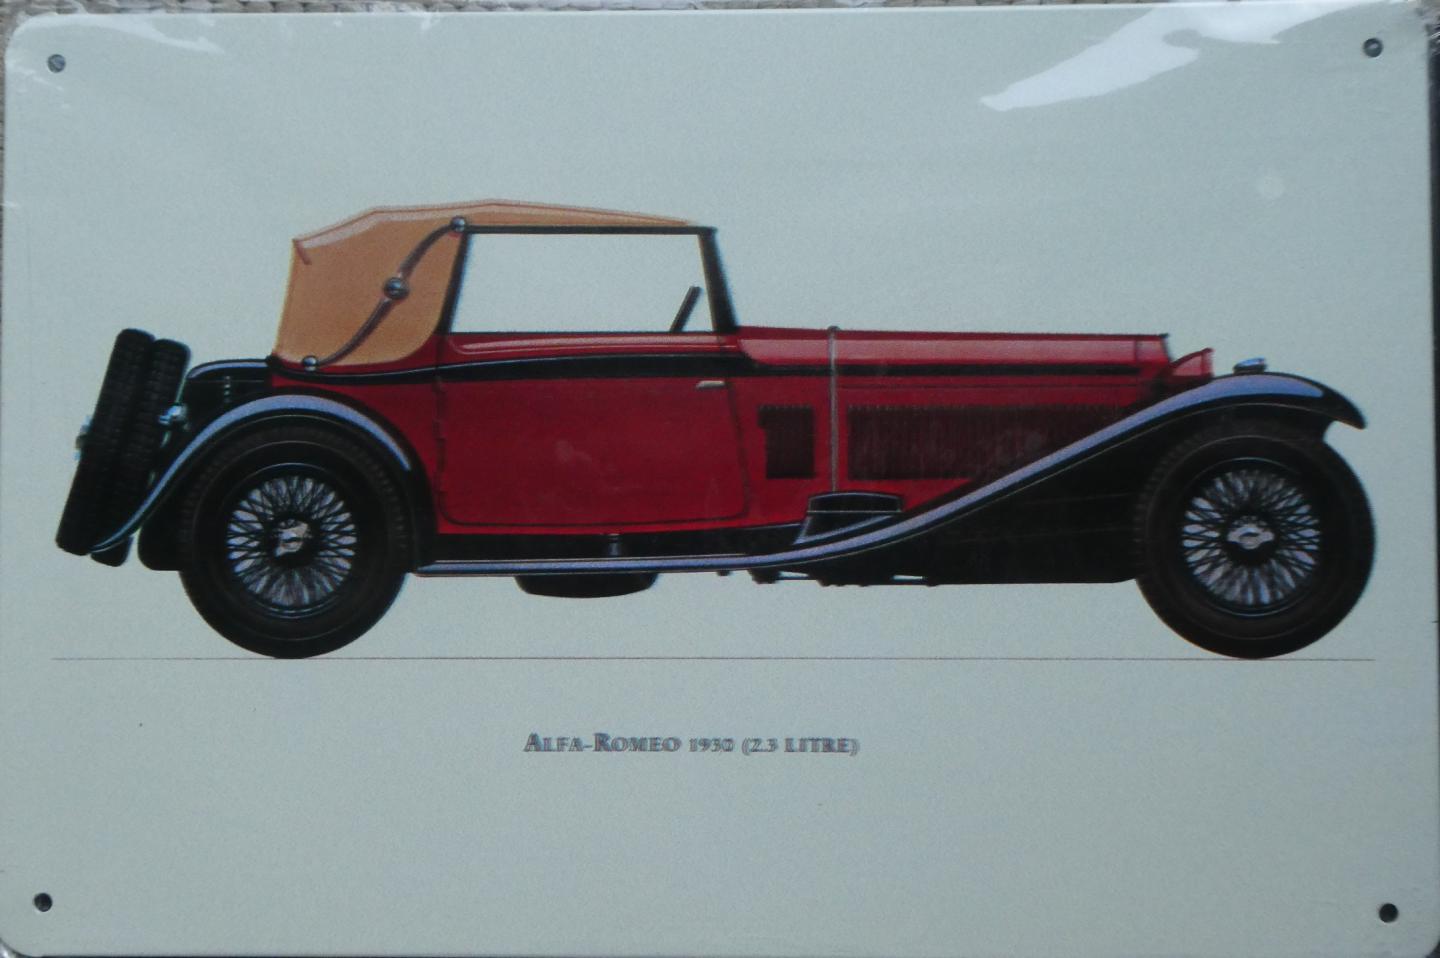  - Alfa Romeo 2,3 liter 1930